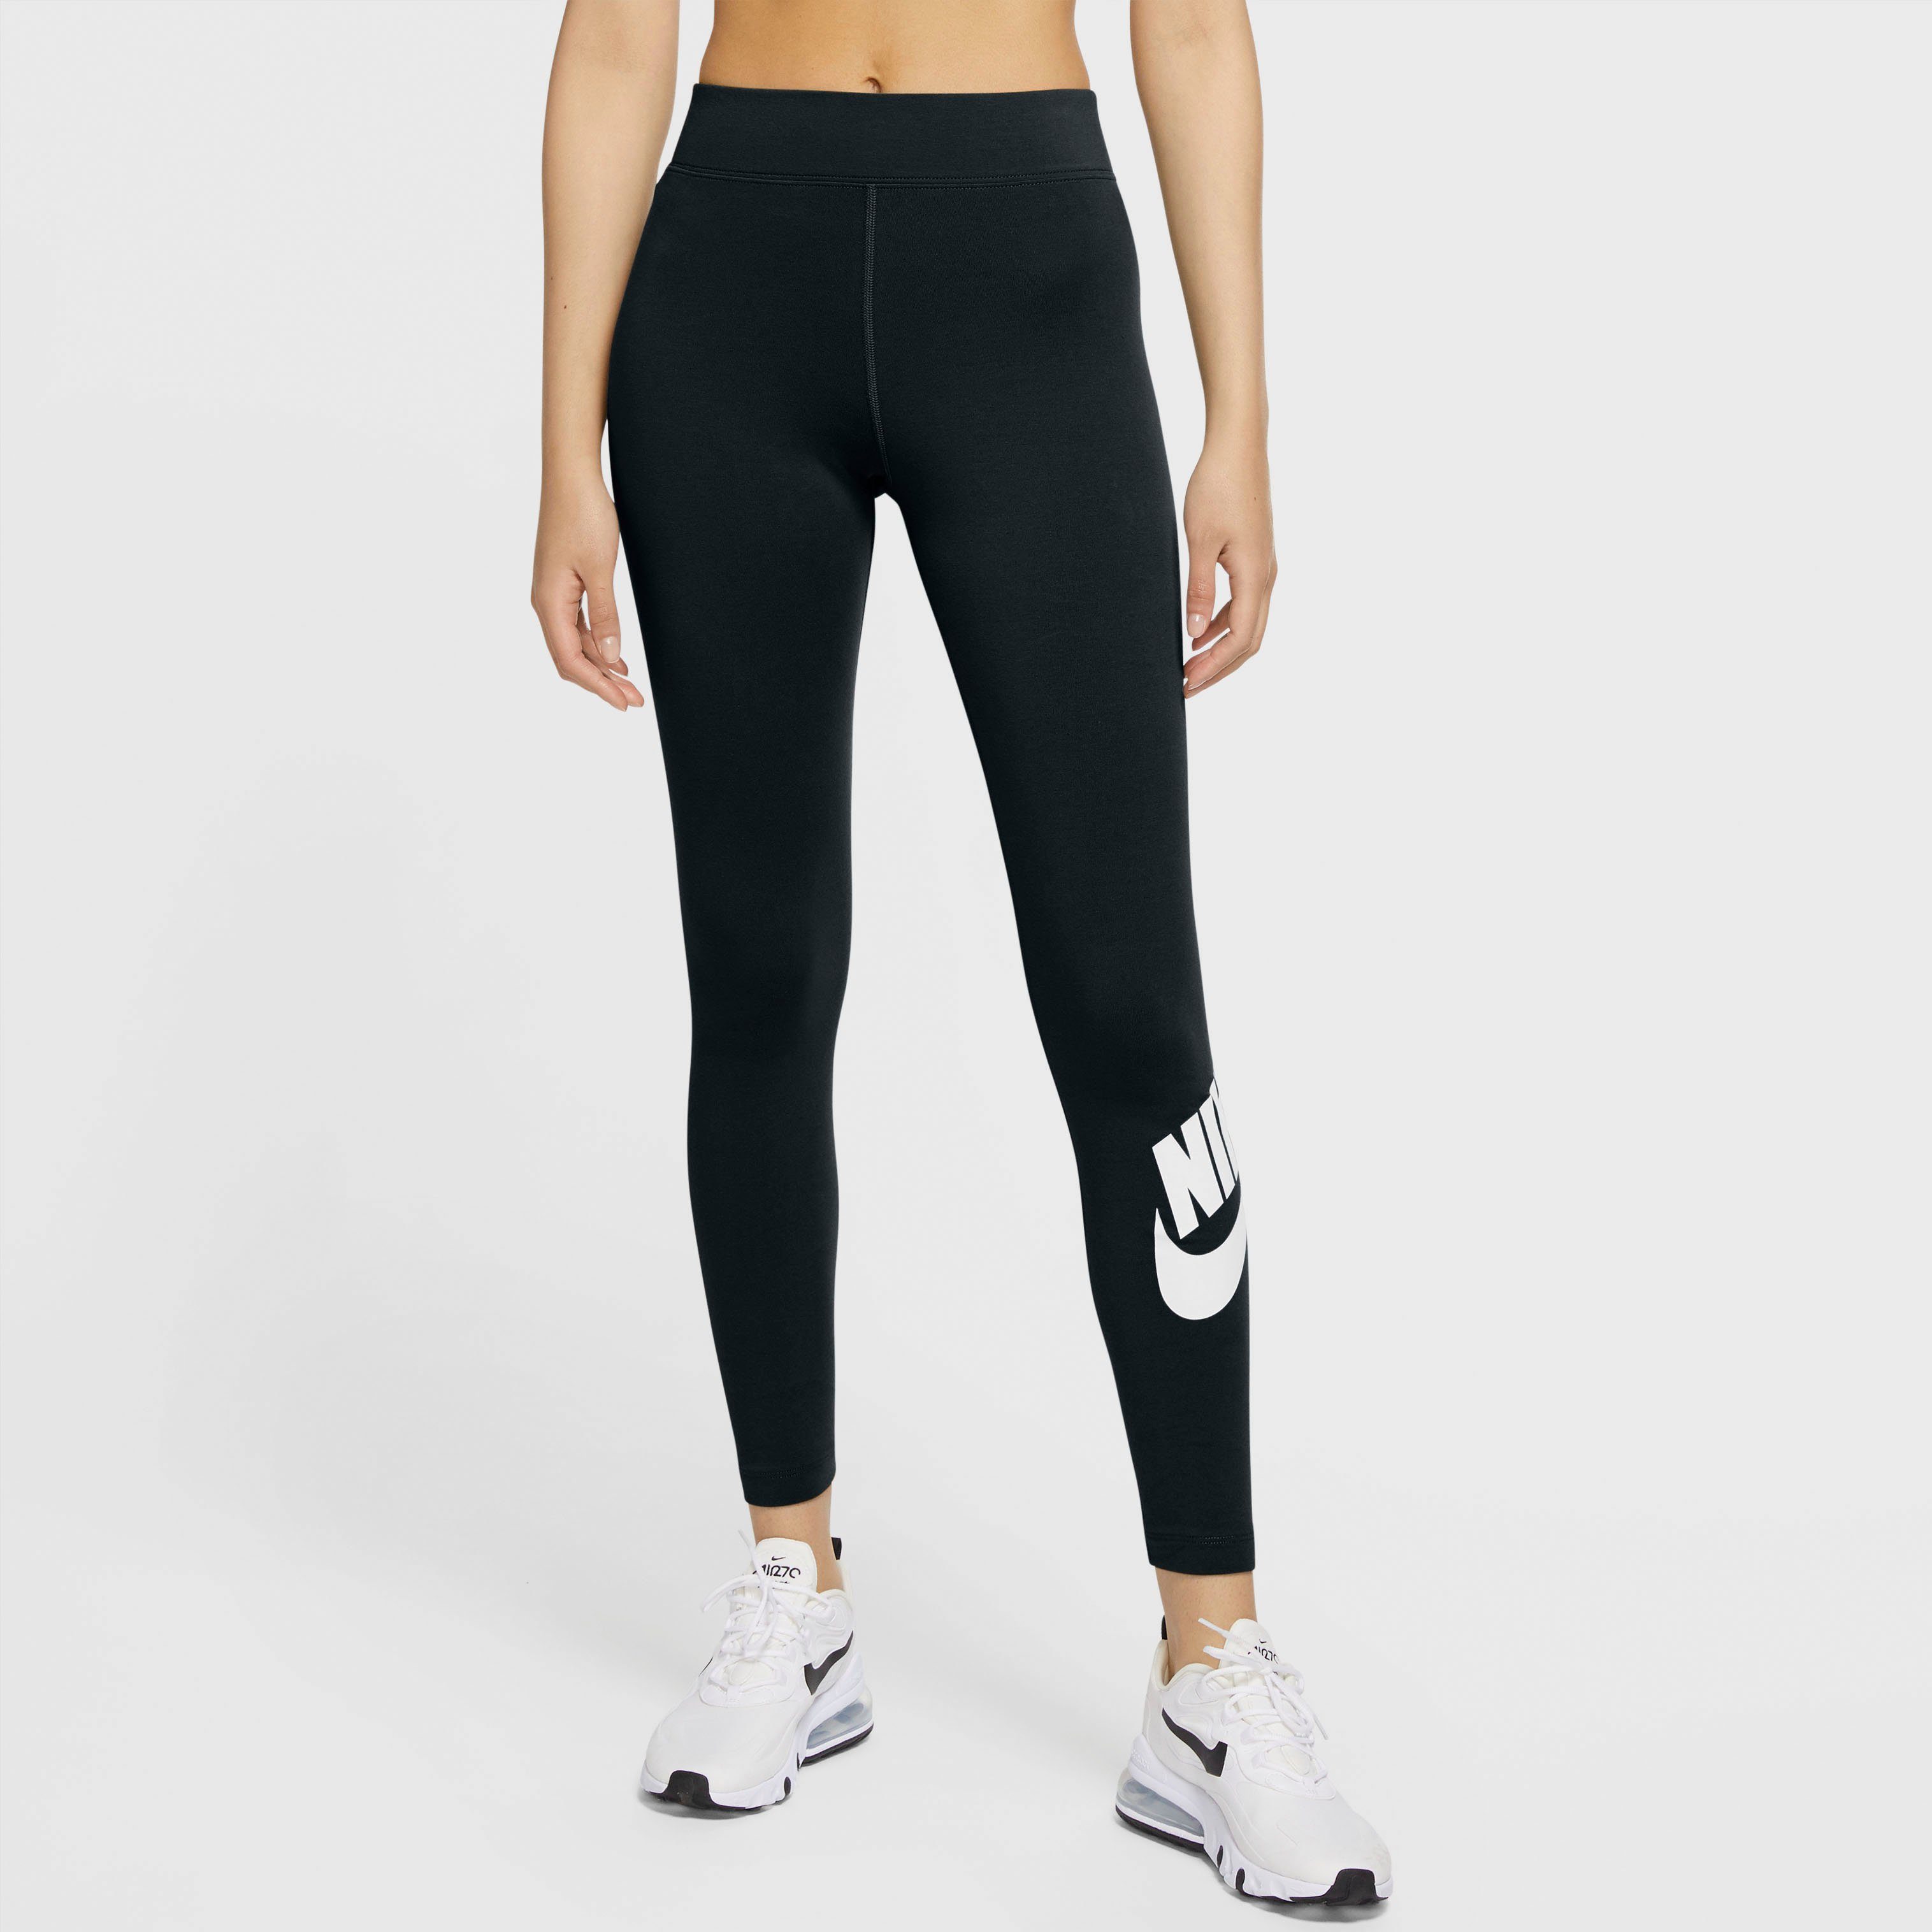 Nike Leggings online kaufen | OTTO